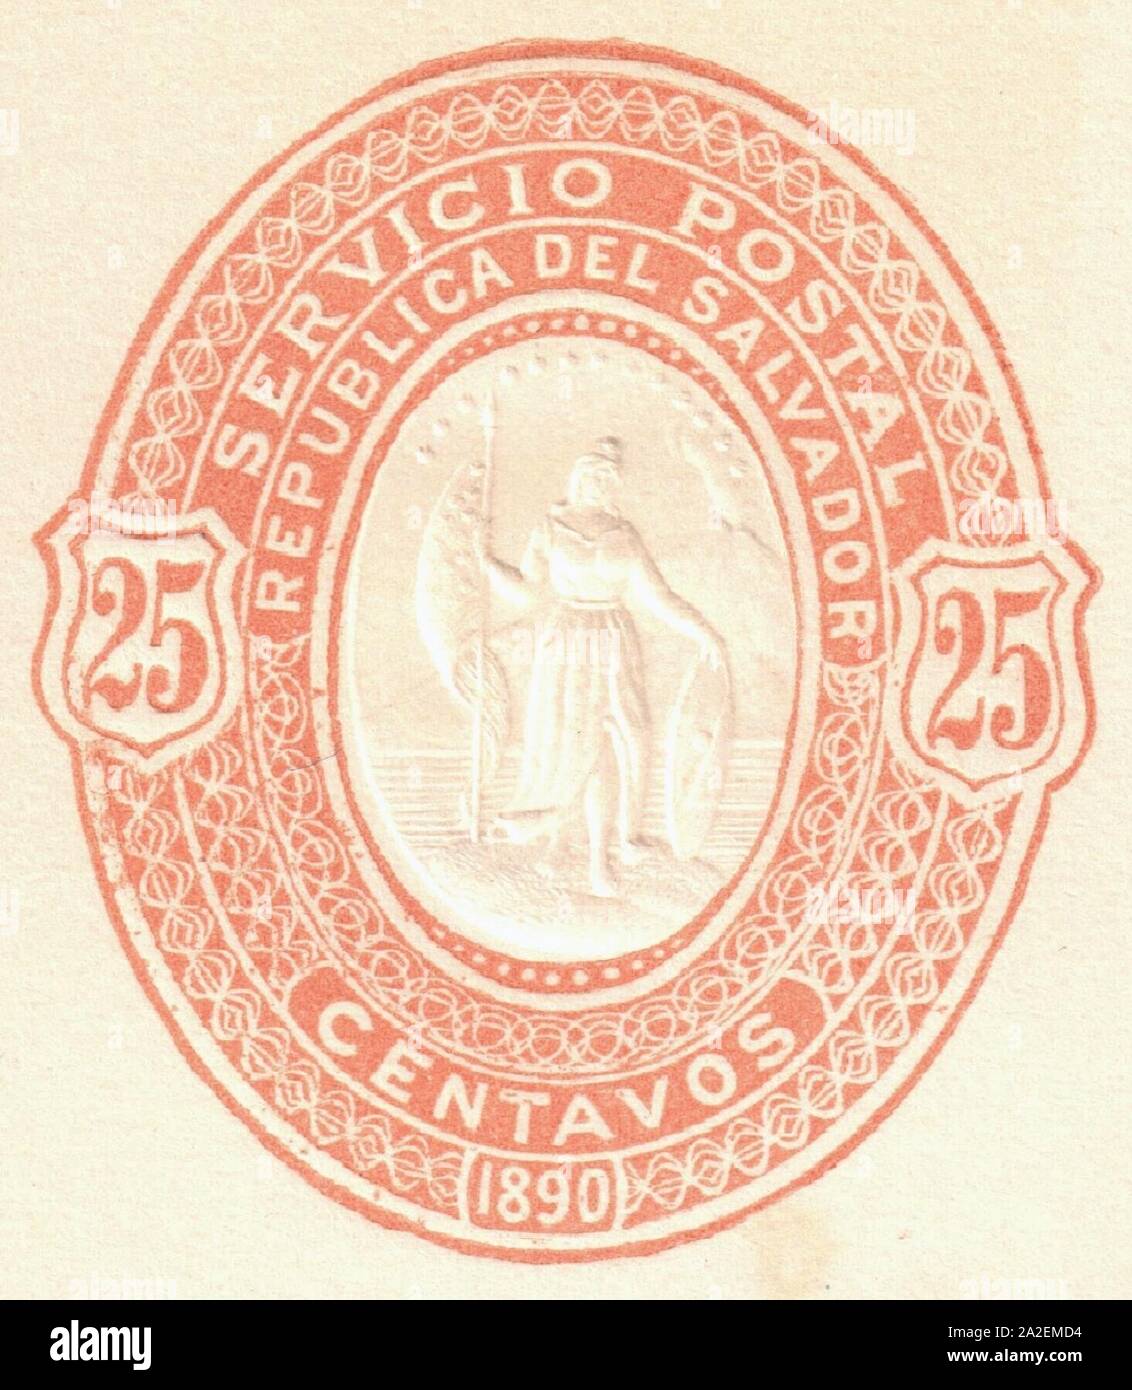 El Salvador 1890 25c wrapper imprinted stamp. Stock Photo